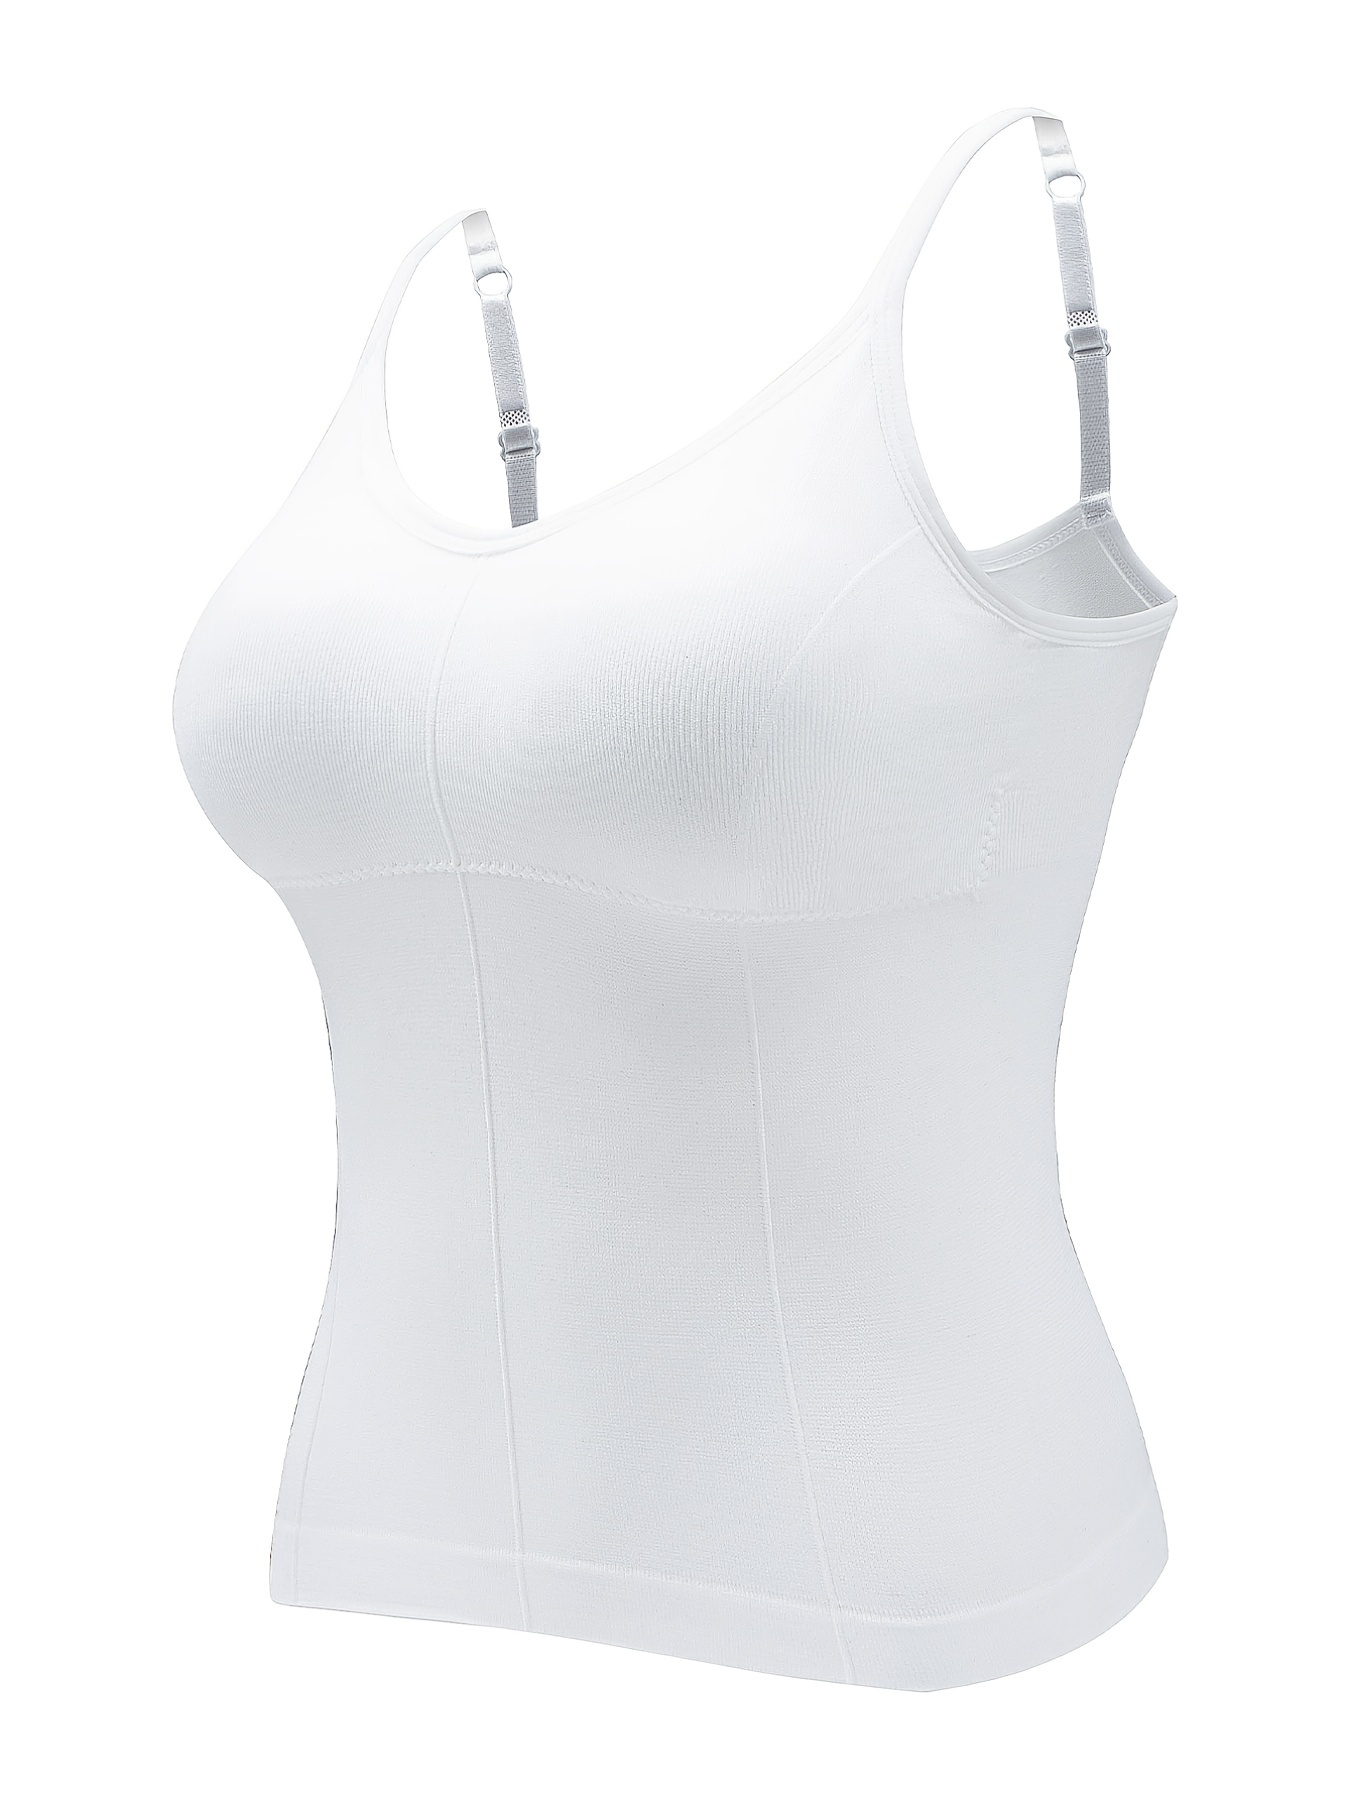 Women's Cotton Tank with Built in Bra, AdjustableTank Top Bra, Sexy  Camisole Top for Women (XL,Grey)